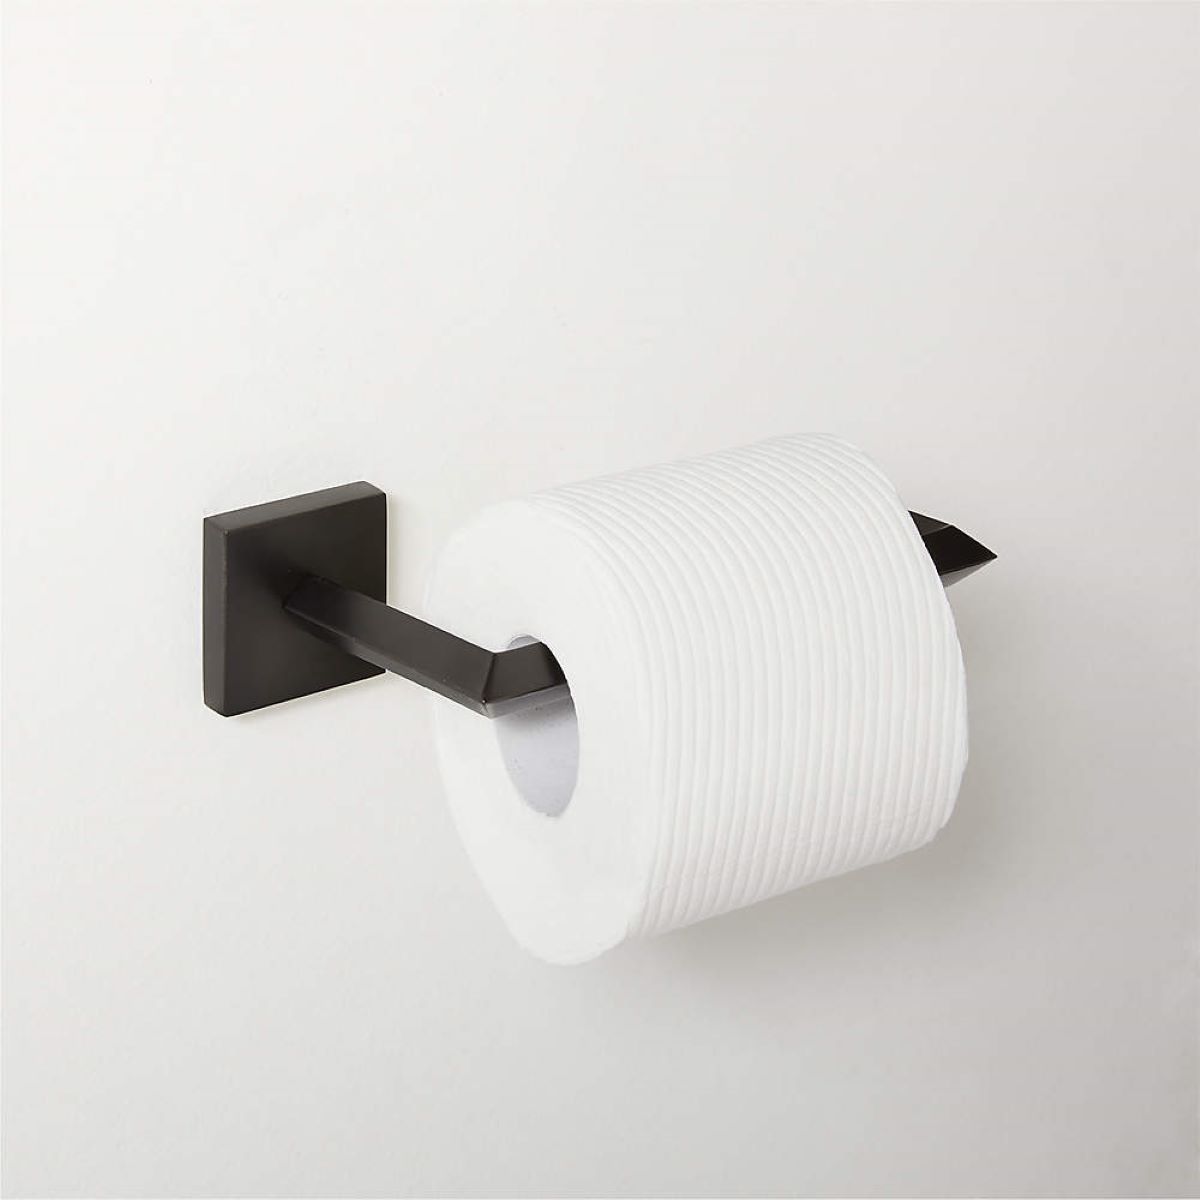 HITSLAM Matte Black Toilet Paper Holder Wall Mount Premium 304 Stainless  Steel Square Toilet Paper Roll Holder for Bathroom Rustproof